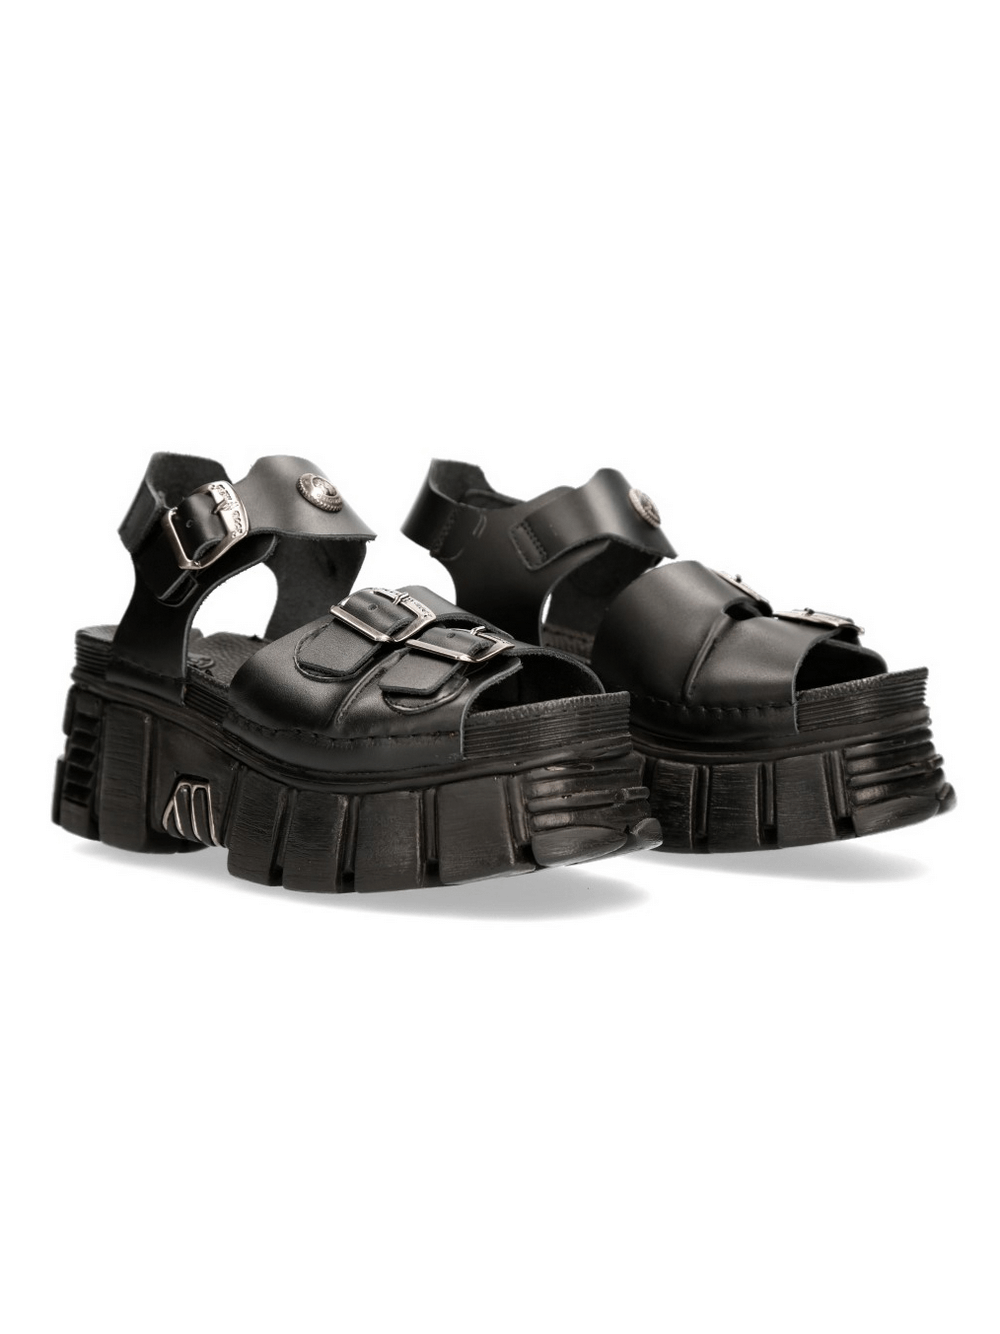 NEW ROCK Black Buckled Platform Sandals in Urban Style